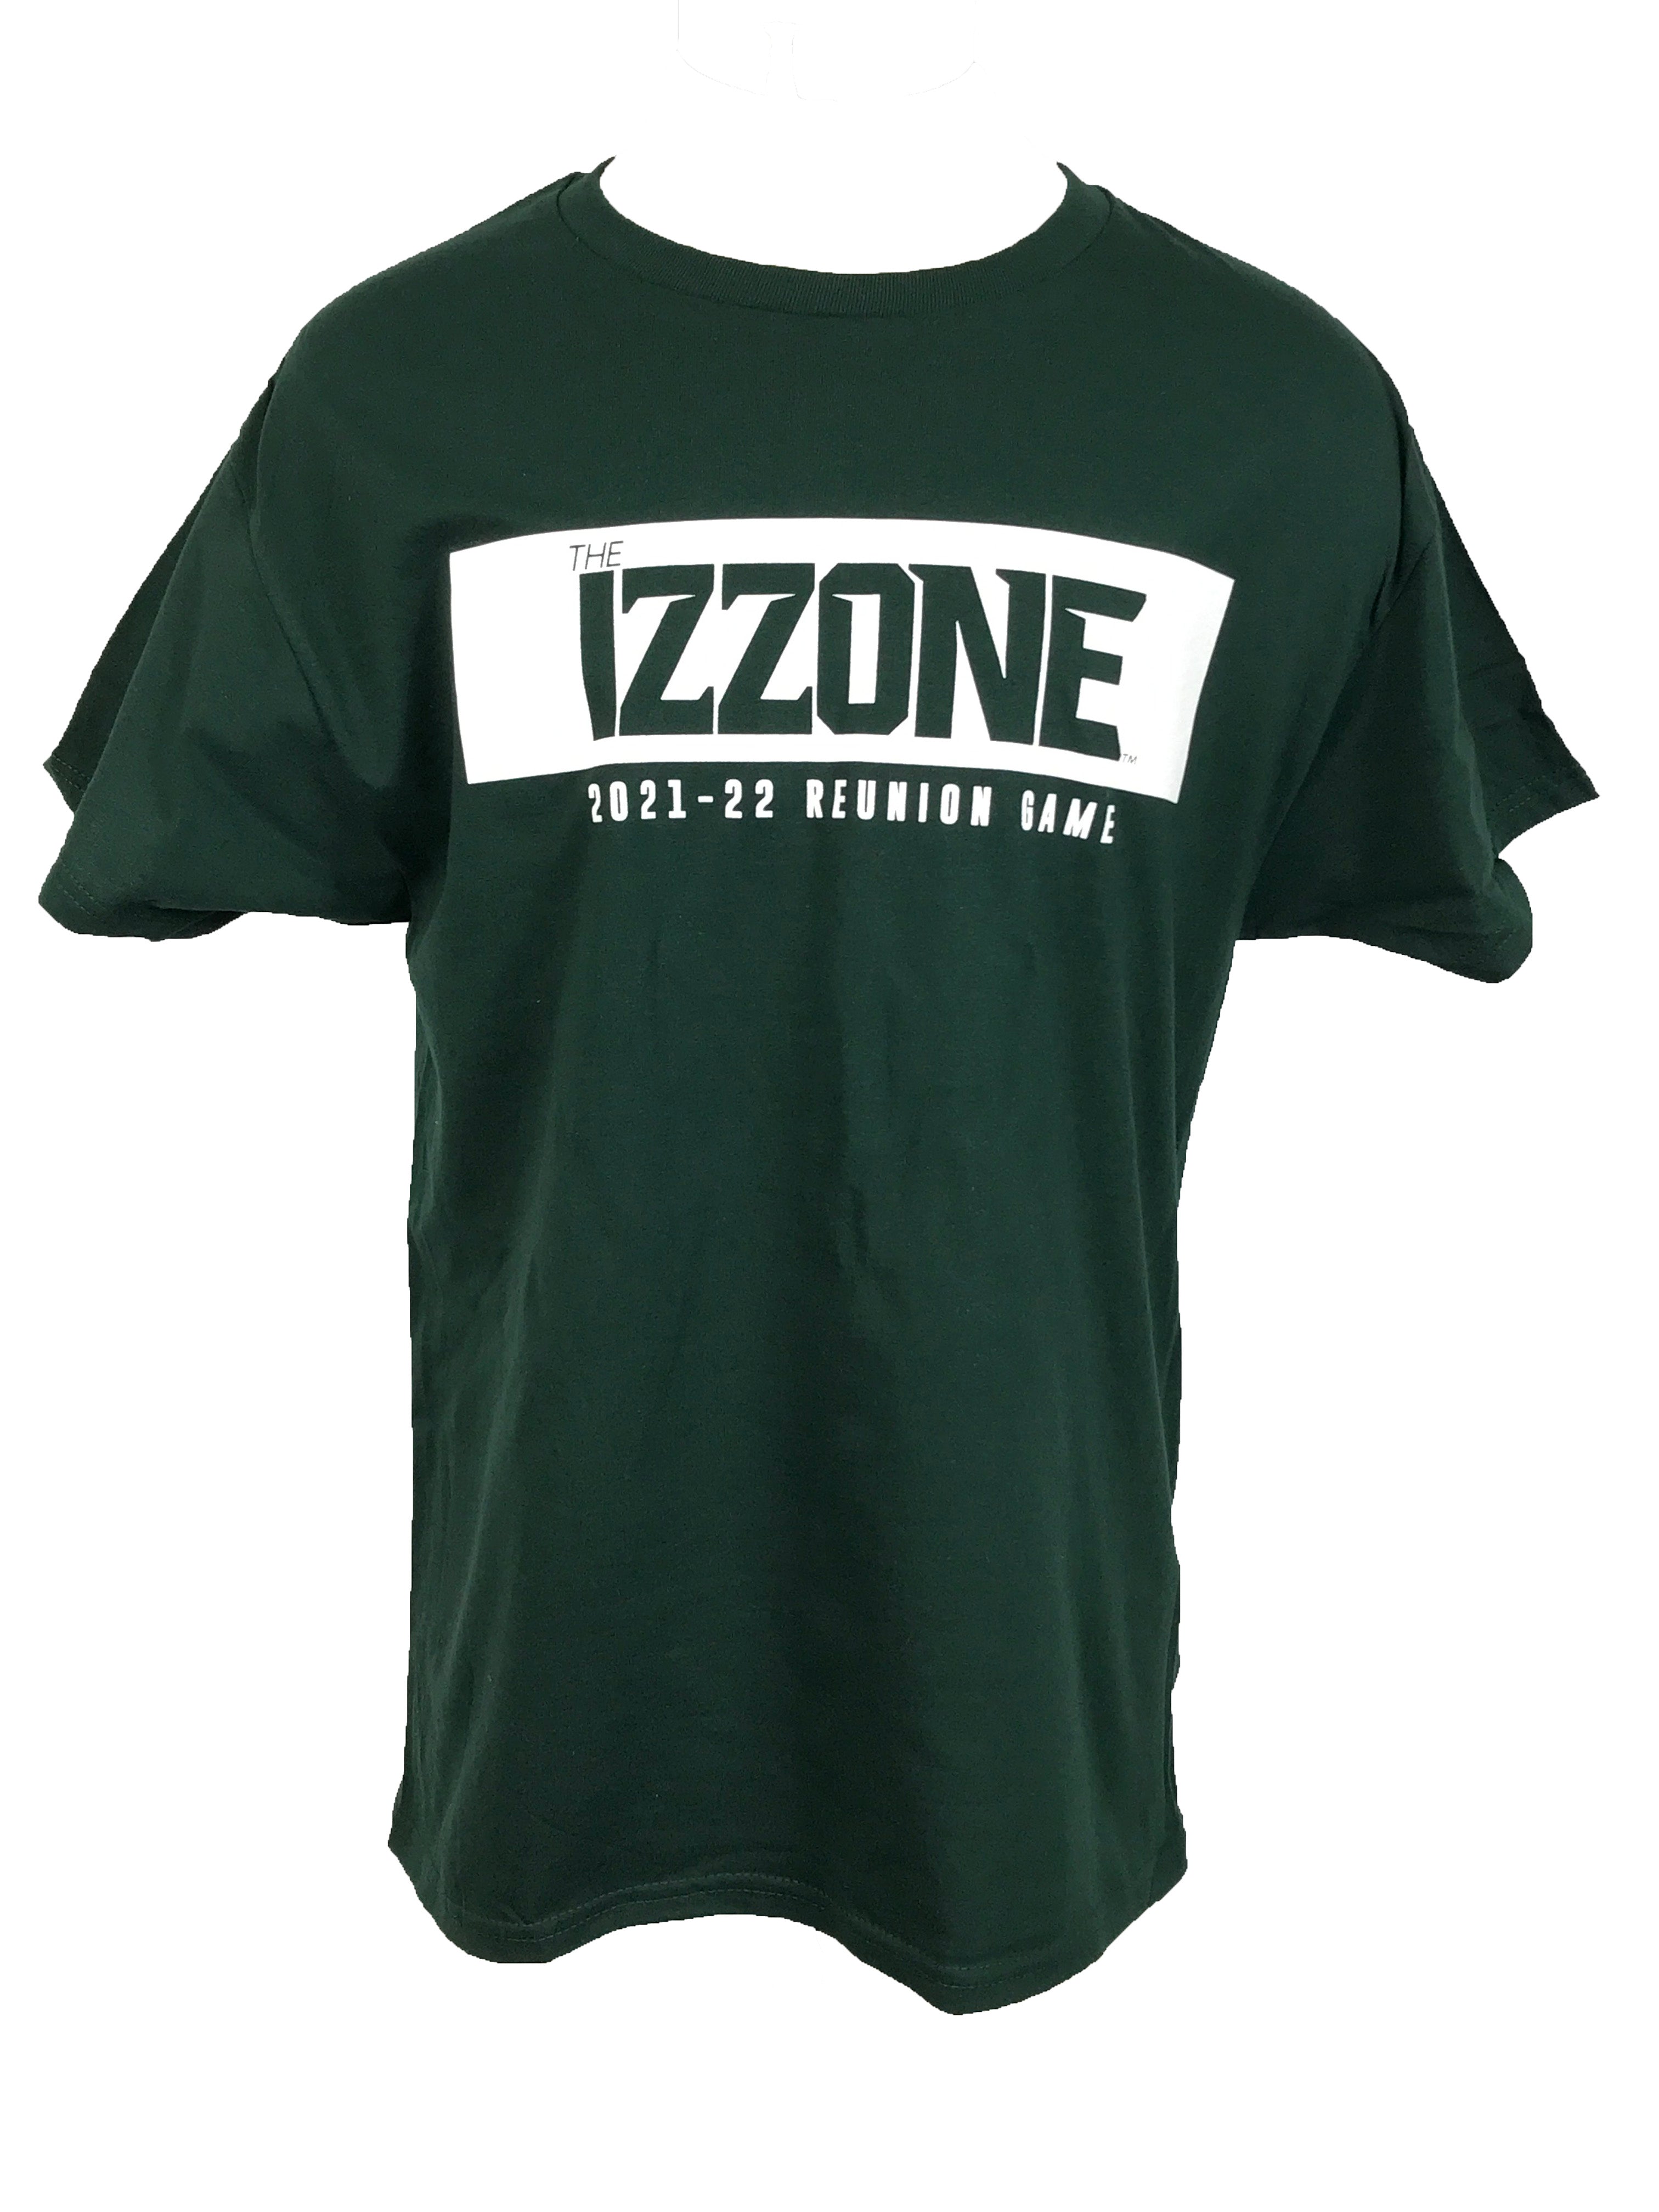 Hanes Green The Izzone 2021-2022 Reunion MSU Basketball T-Shirt Men's Size XL